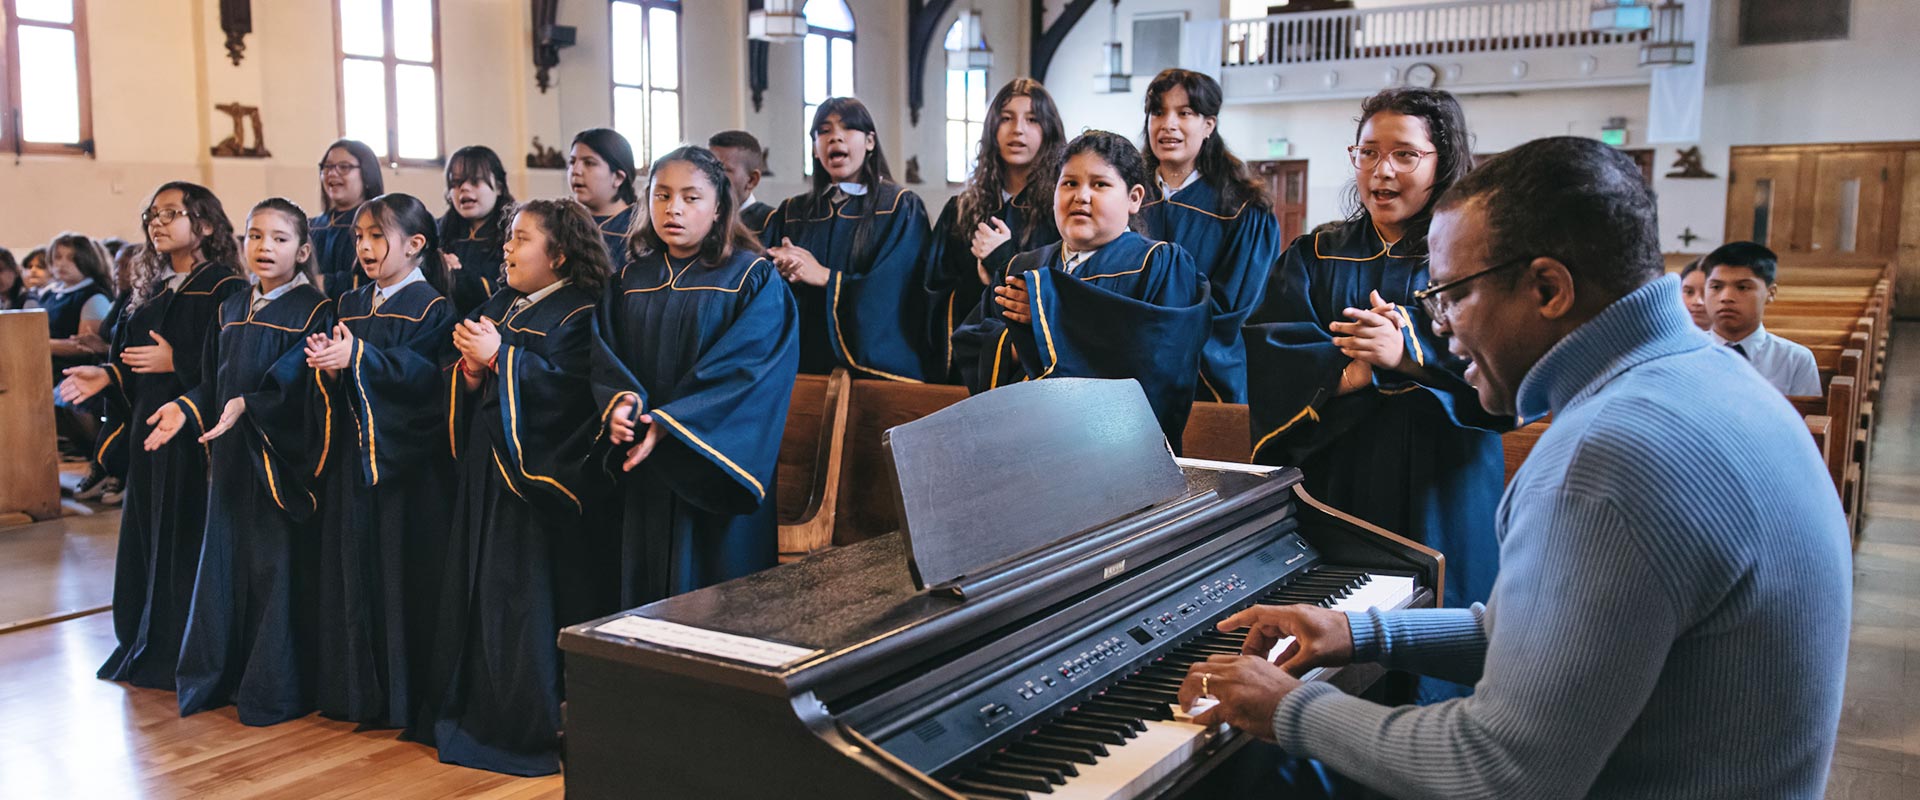 St. Raphael students singing in choir